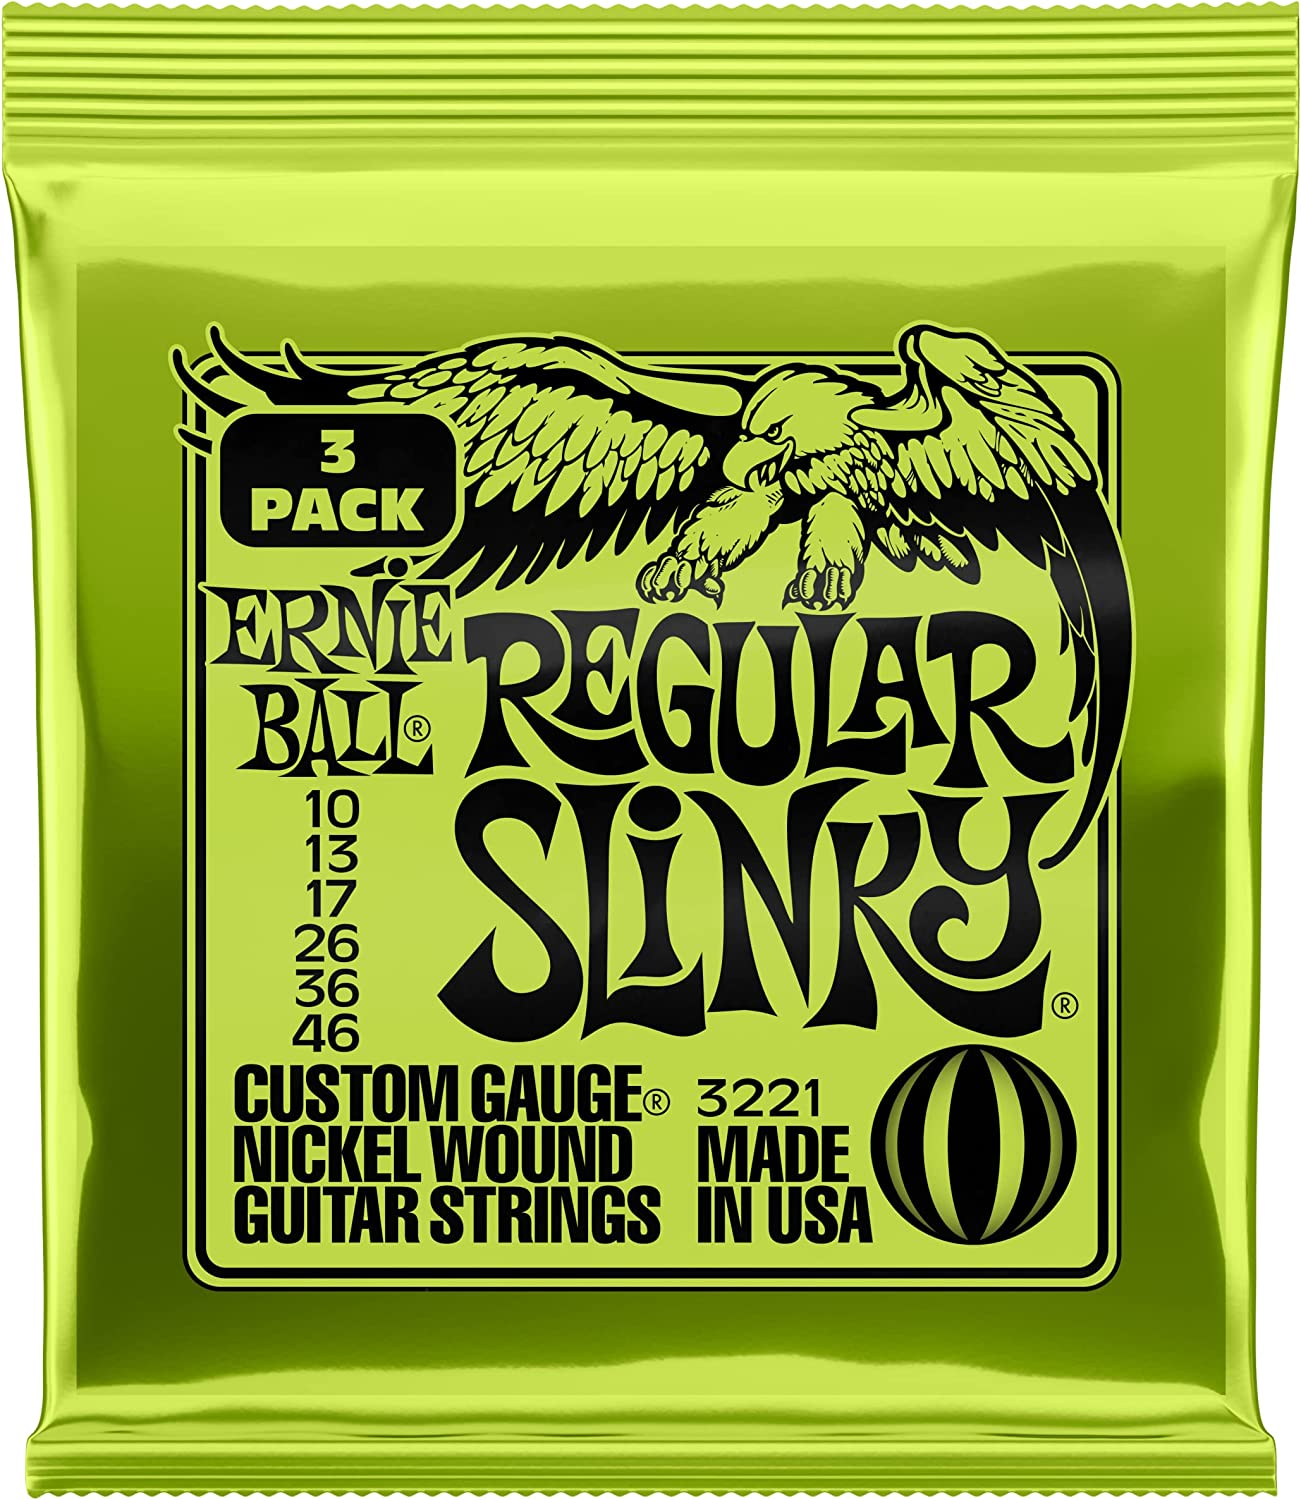 Ernie Ball Slinky Electric Guitar Strings 3 - Pack